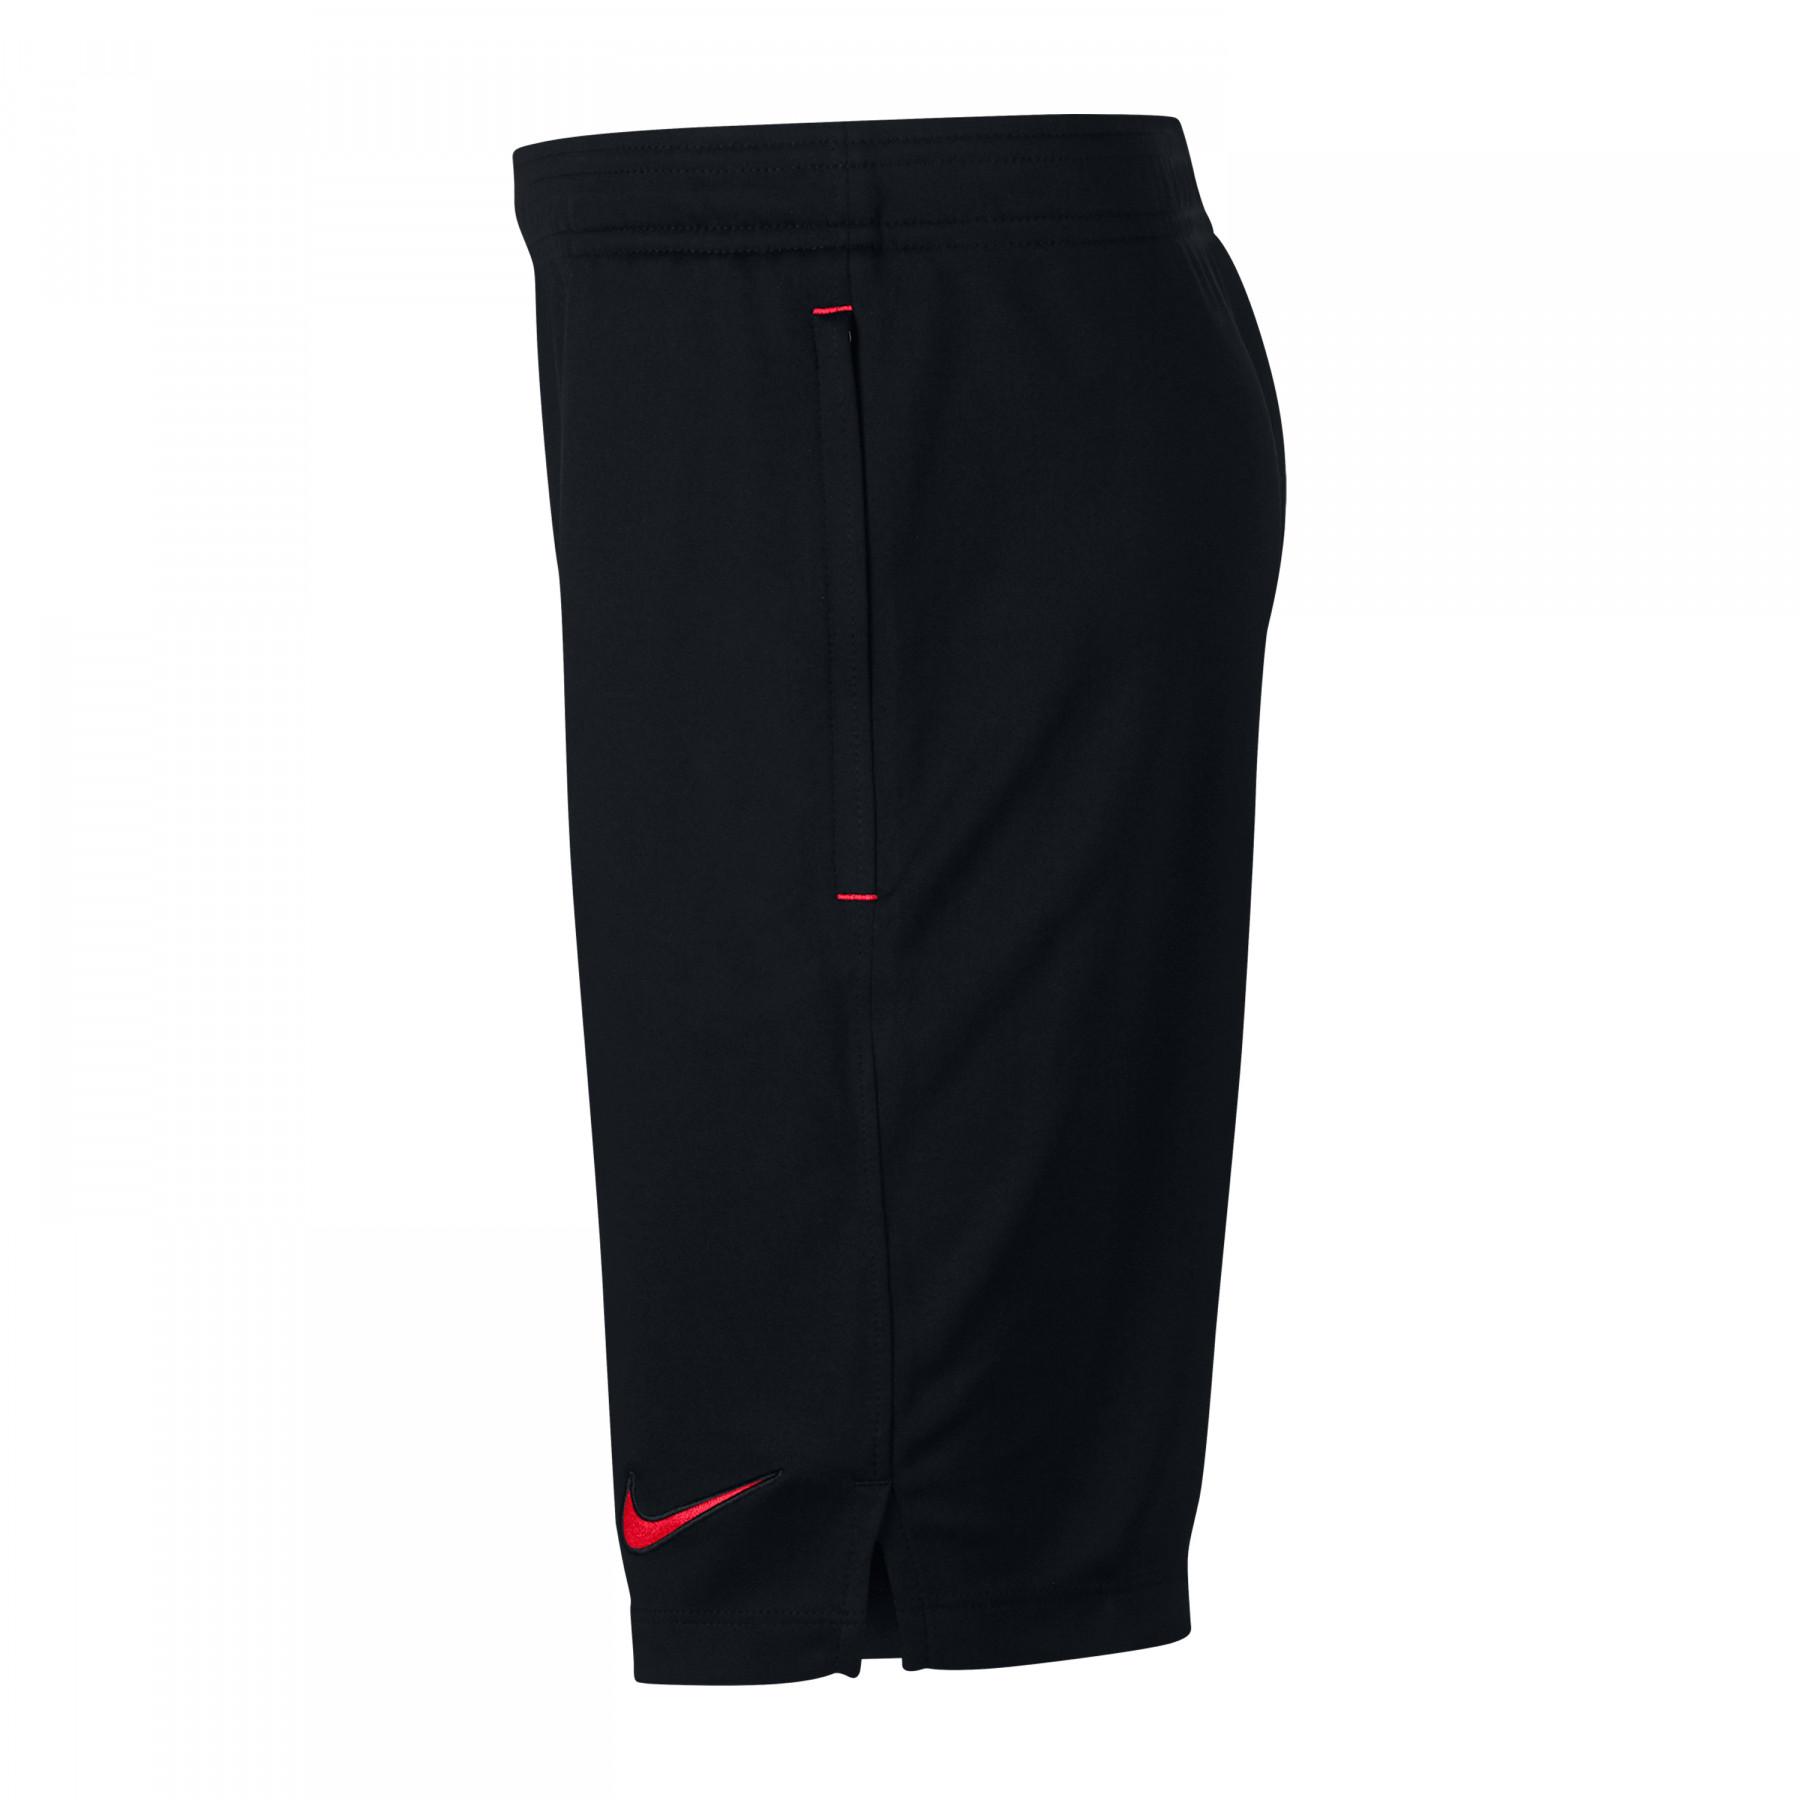 Shorts för barn Nike Dri-FIT Neymar